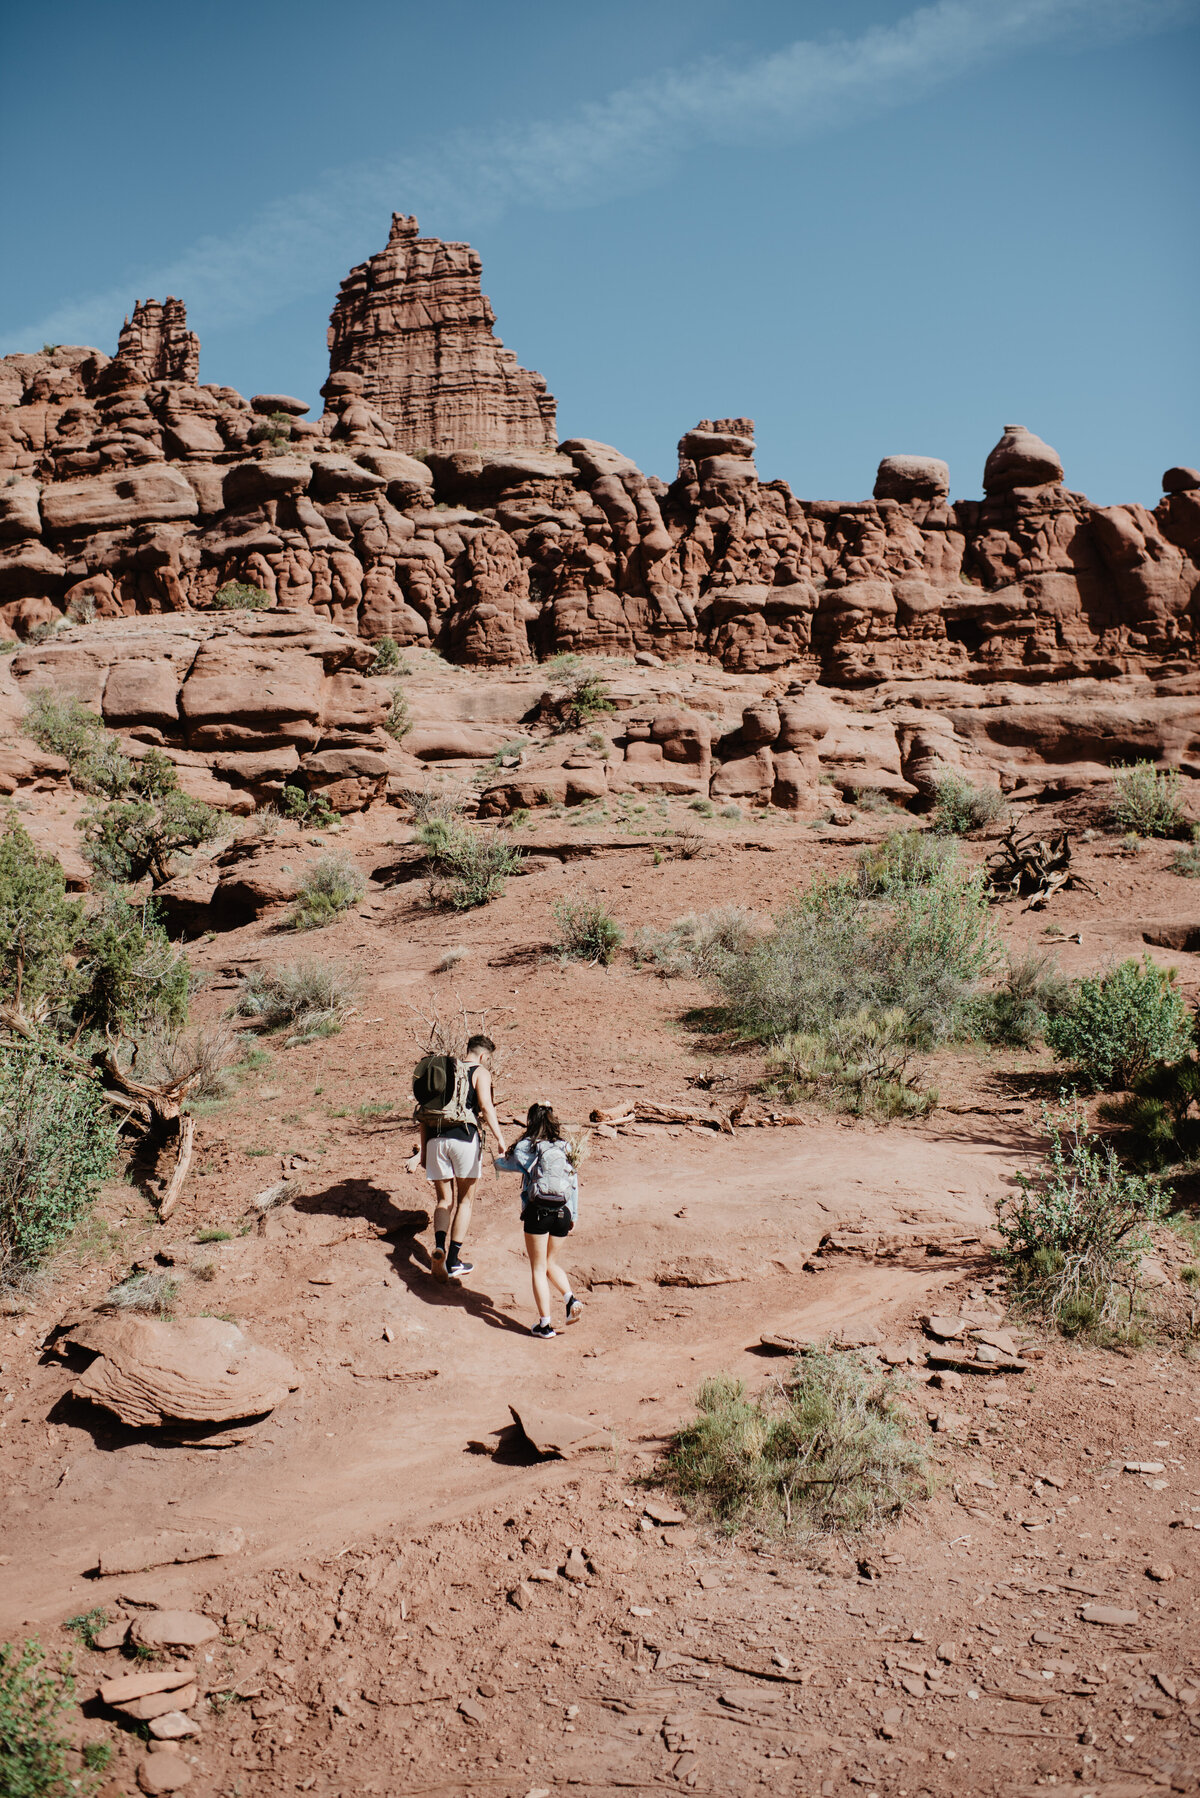 Utah Elopement Photographer captures couple walking through Moab